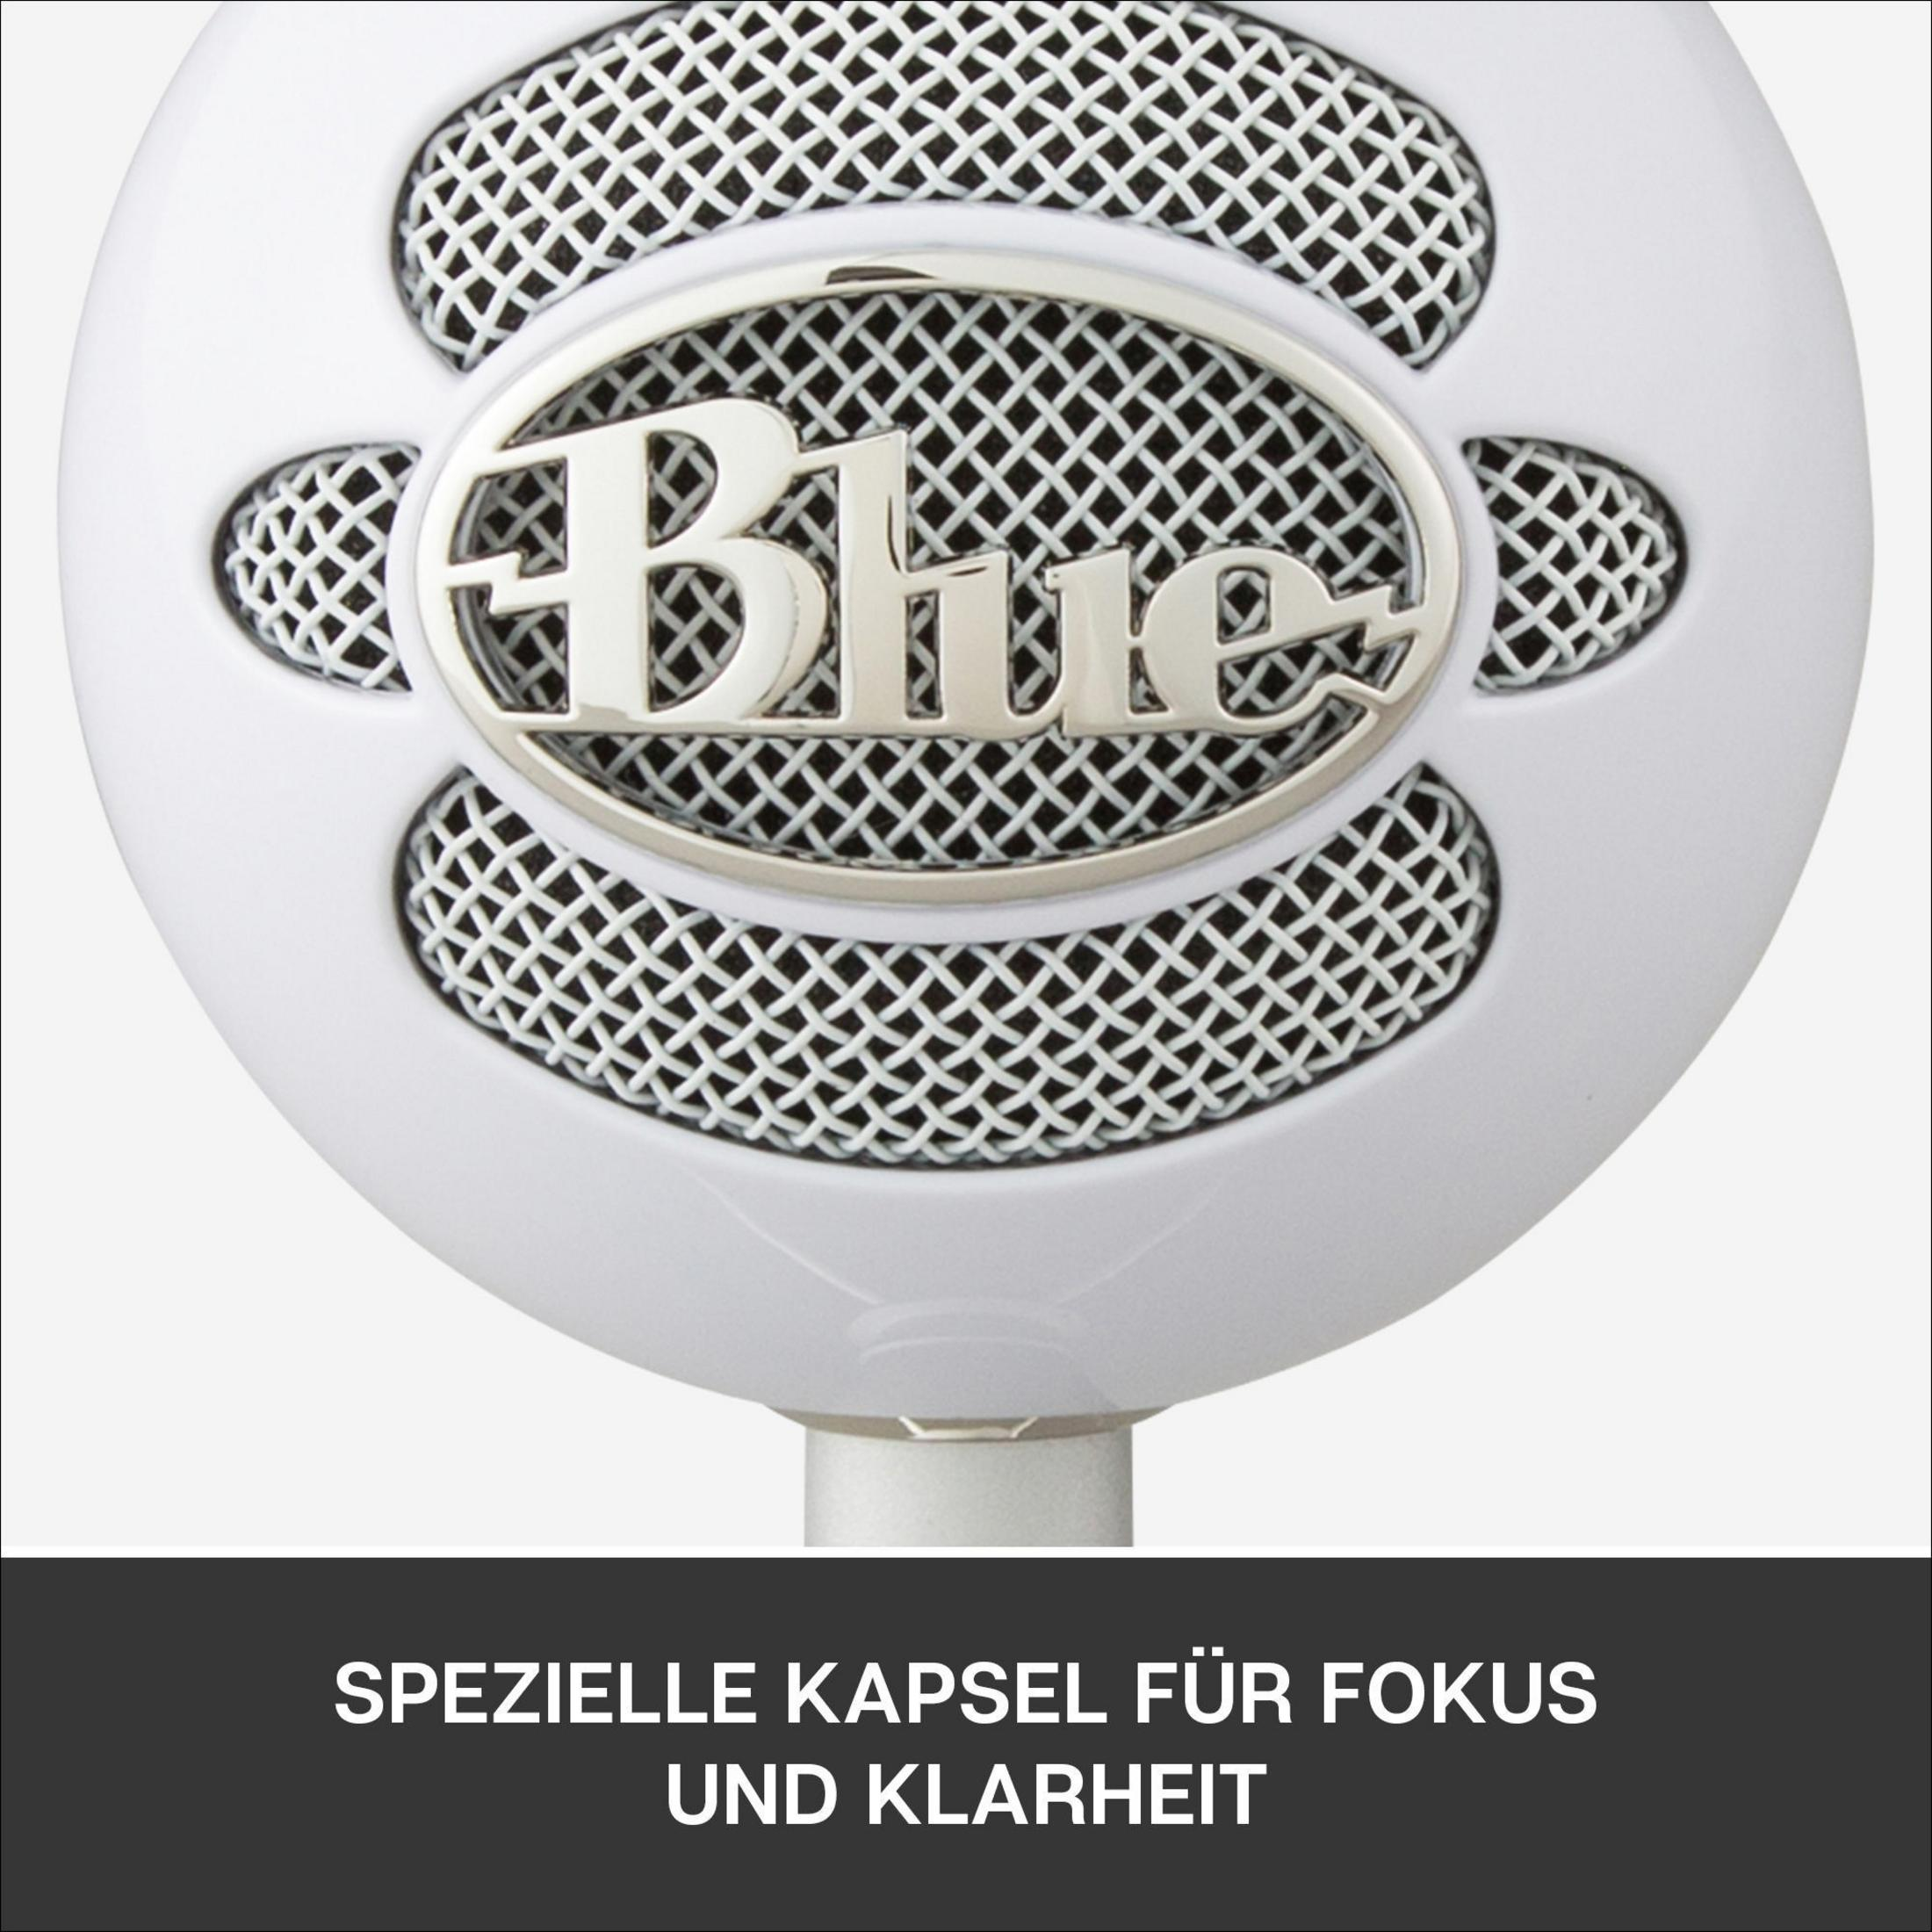 ICE USB 988-000181 SNOWBALL WHITE BLUE Mikrofon, Weiß USB